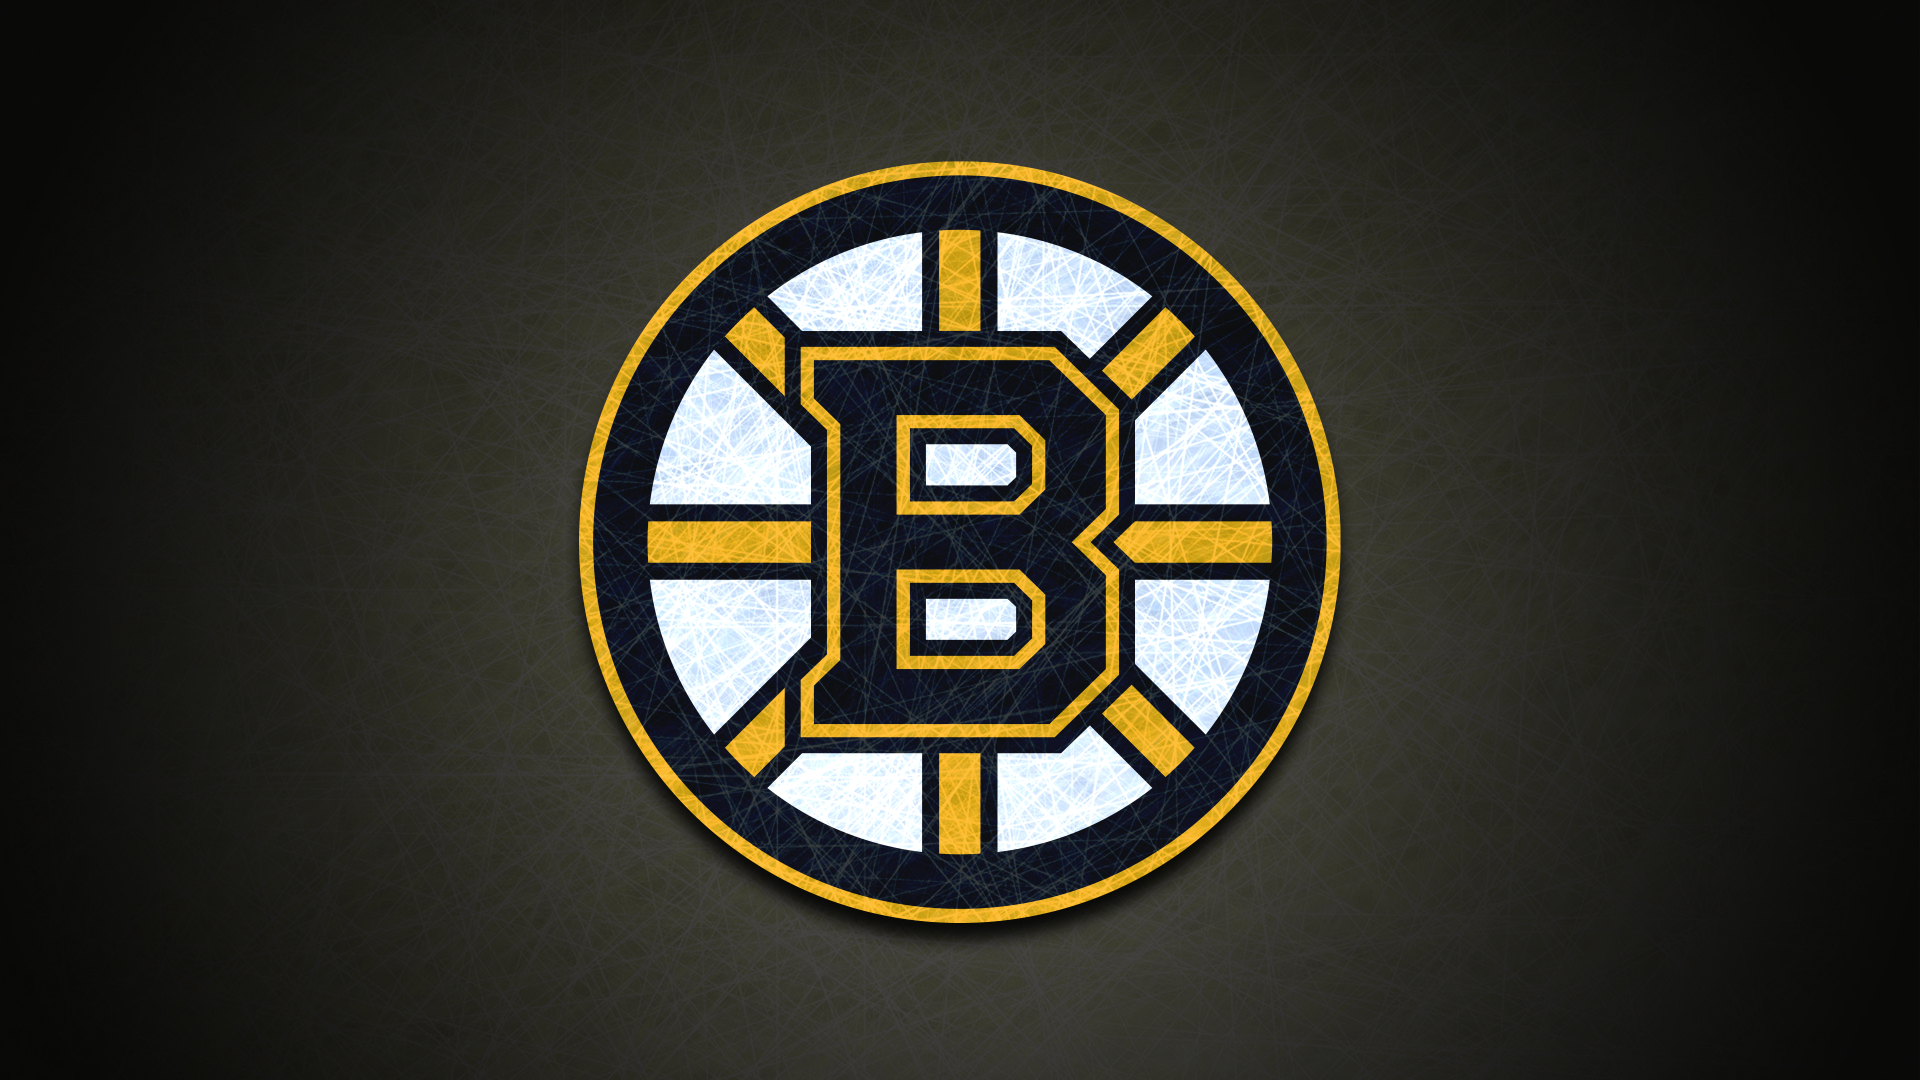 Boston Bruins 4k Ultra HD Wallpaper.